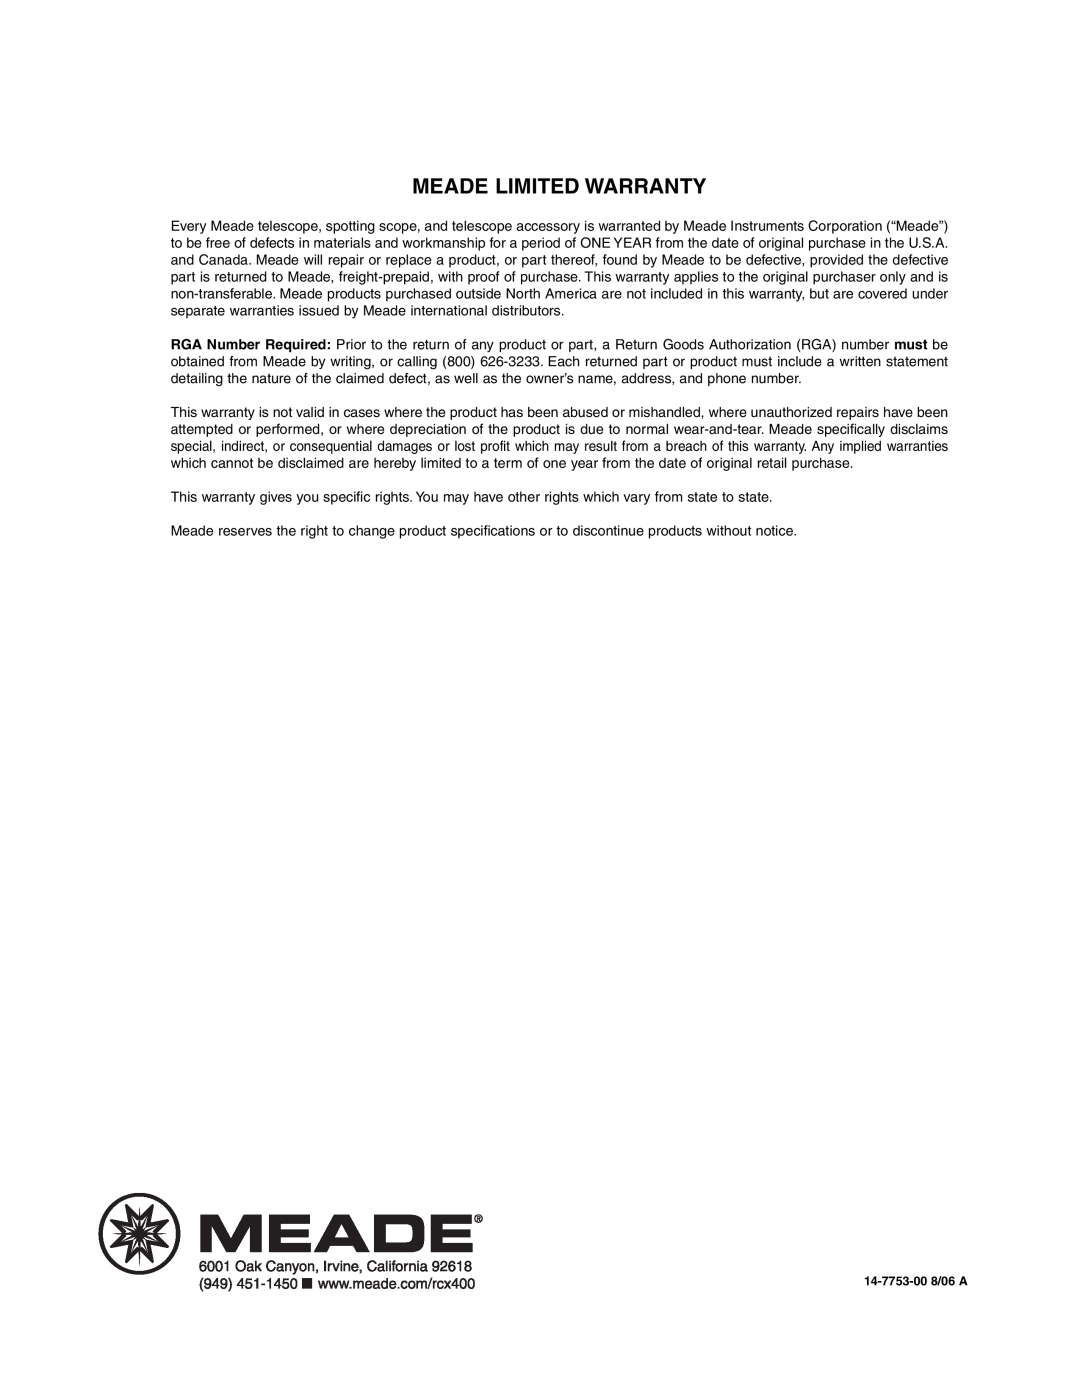 Meade RCX400 instruction manual Meade Limited Warranty, 14-7753-008/06 A 